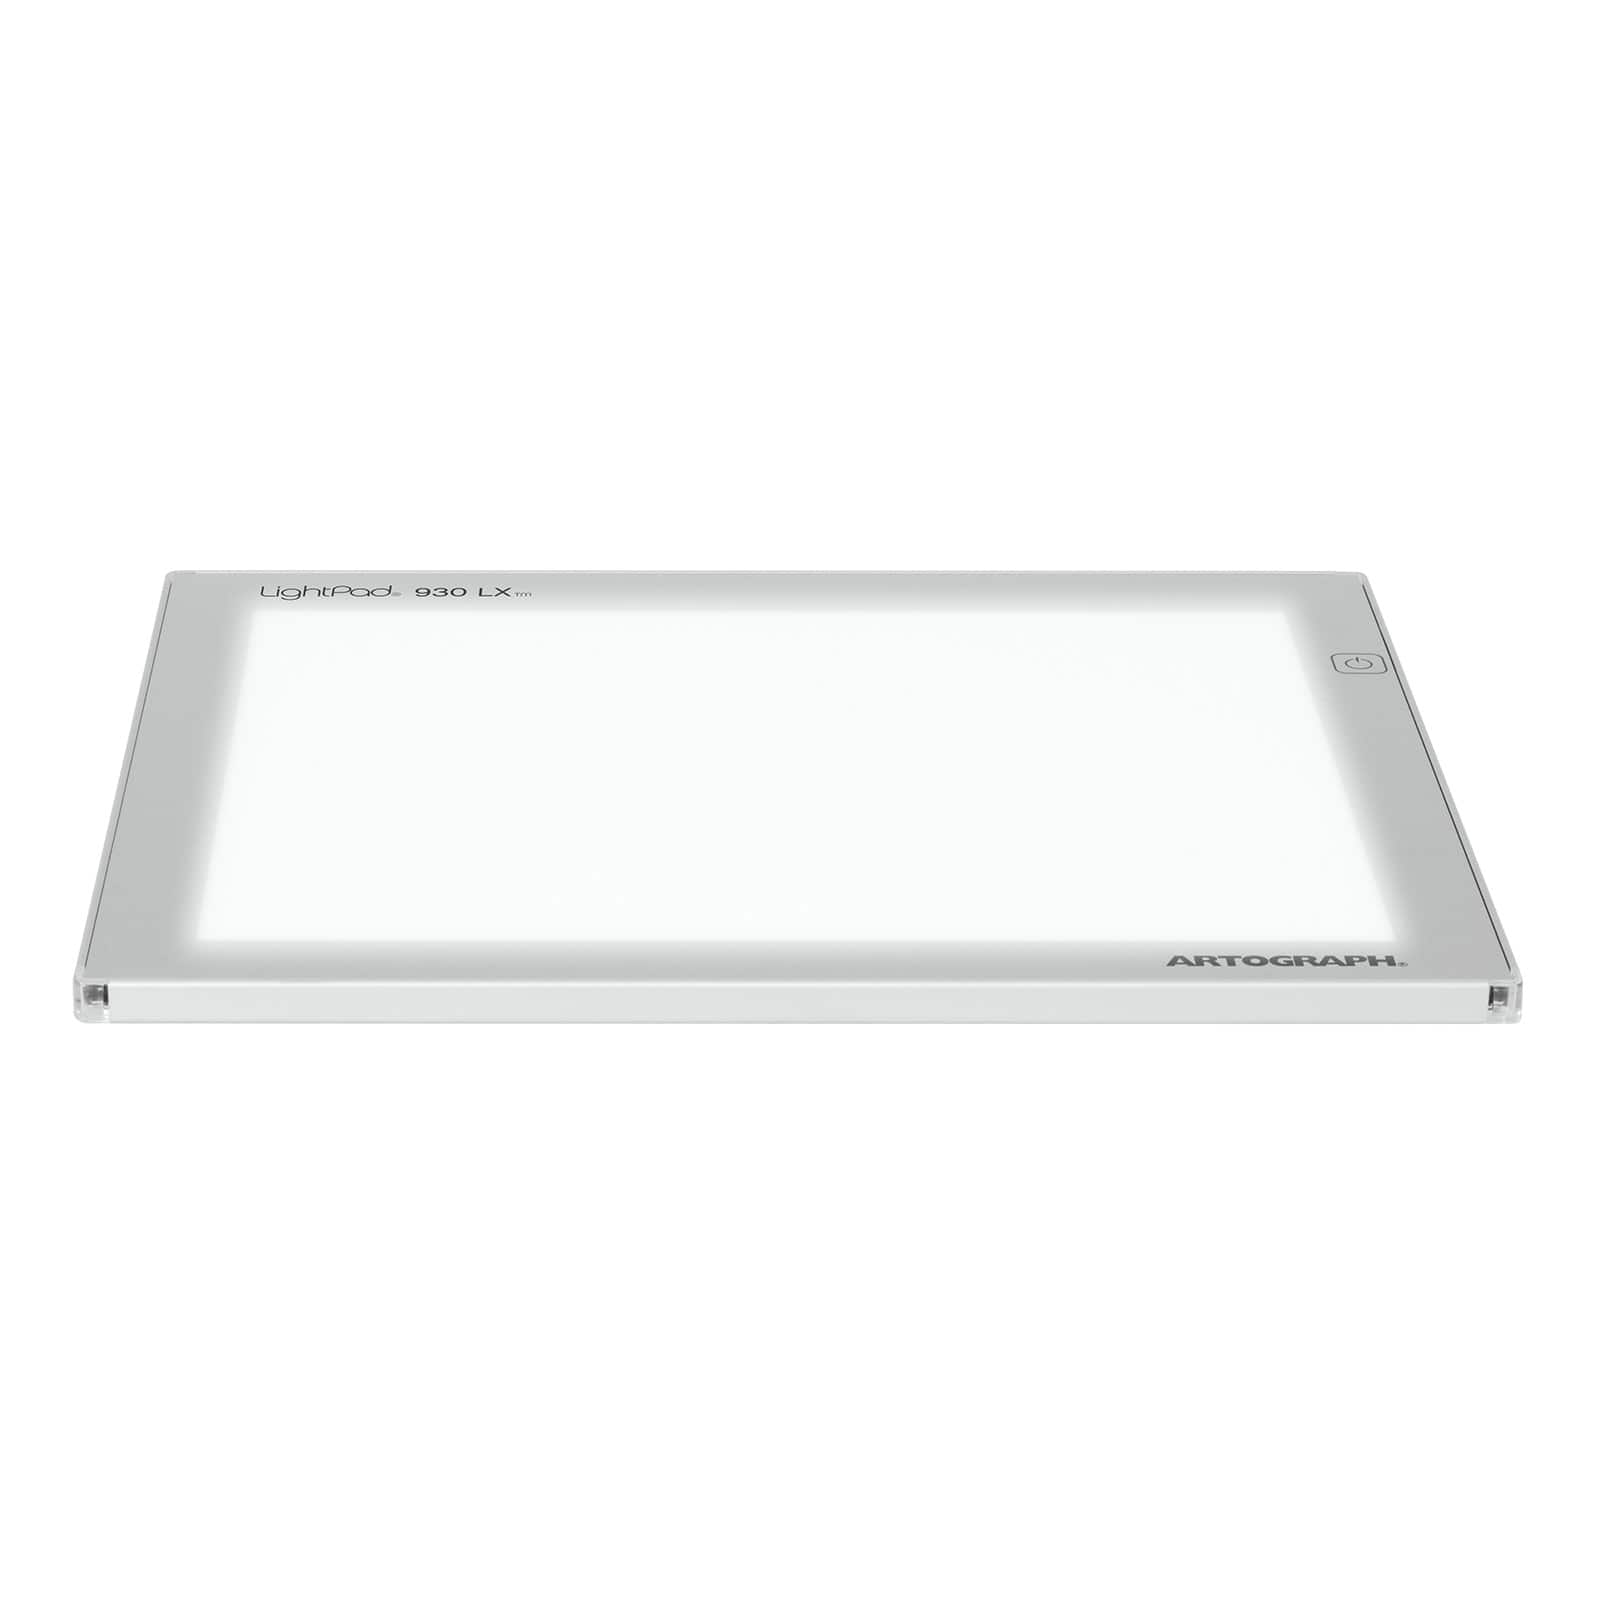 Artograph LightPad® 920 LX 12x9 Thin, Dimmable Light Box for